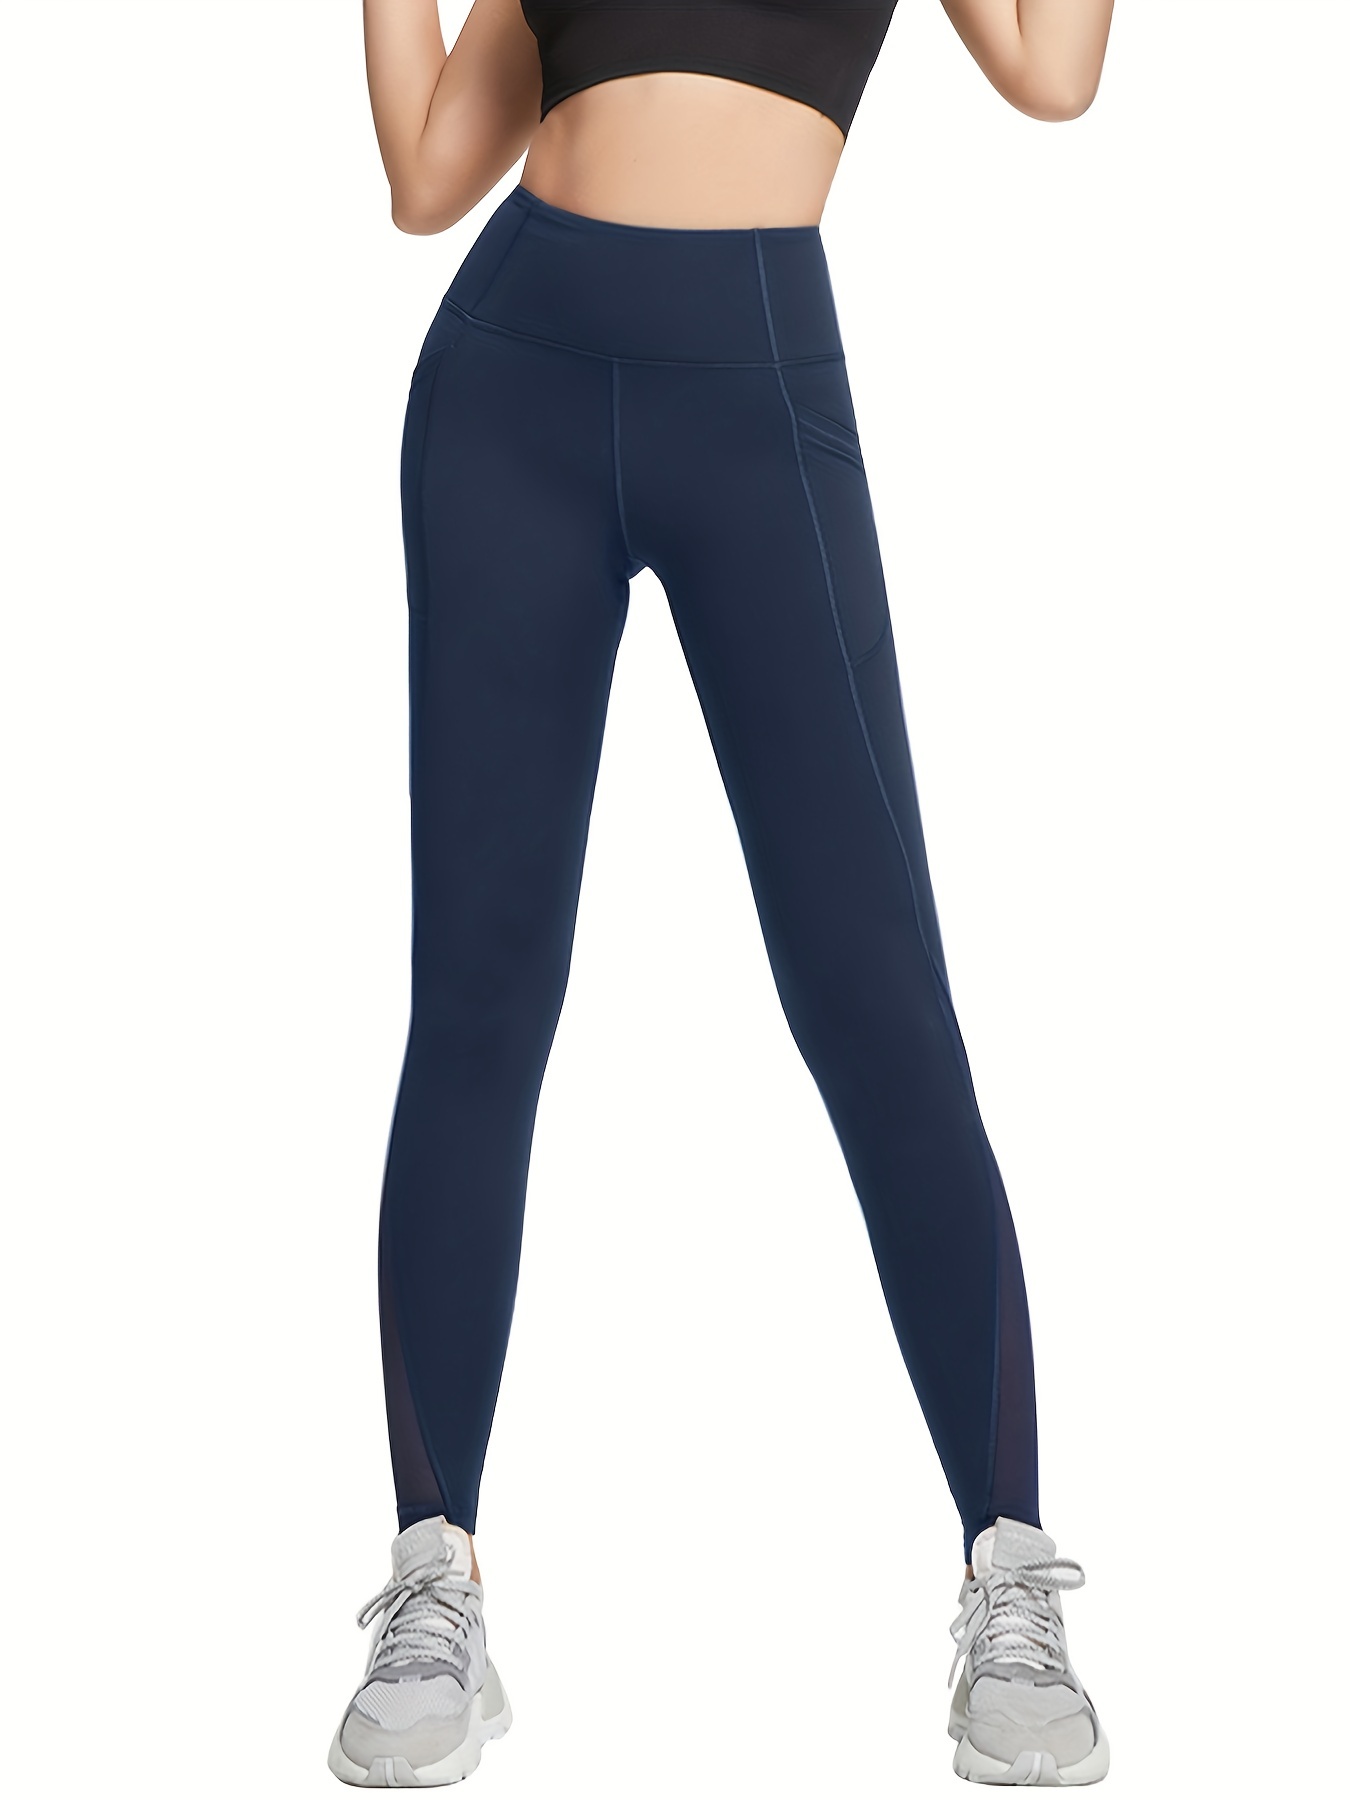 Athletic Women's Tights Sporty Tummy Control Yoga Pants Skimpy